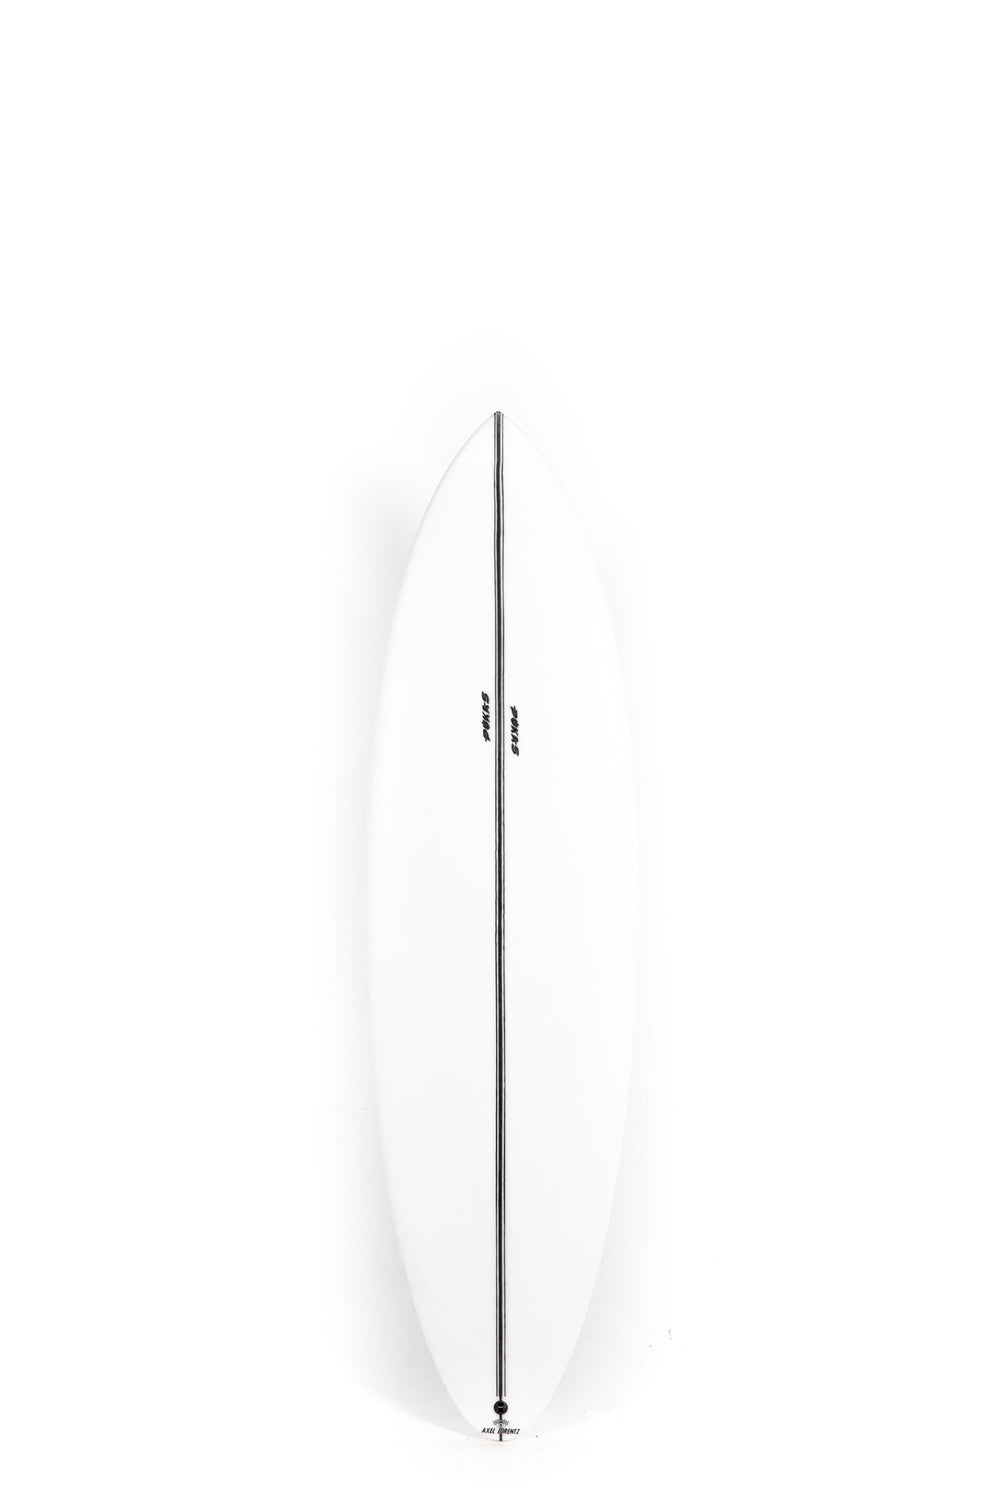 Pukas Surf Shop - Pukas Surfboard - 69ER EVOLUTION by Axel Lorentz- 6’6” x 21.25 x 2.88 - 42,21L - AX10799